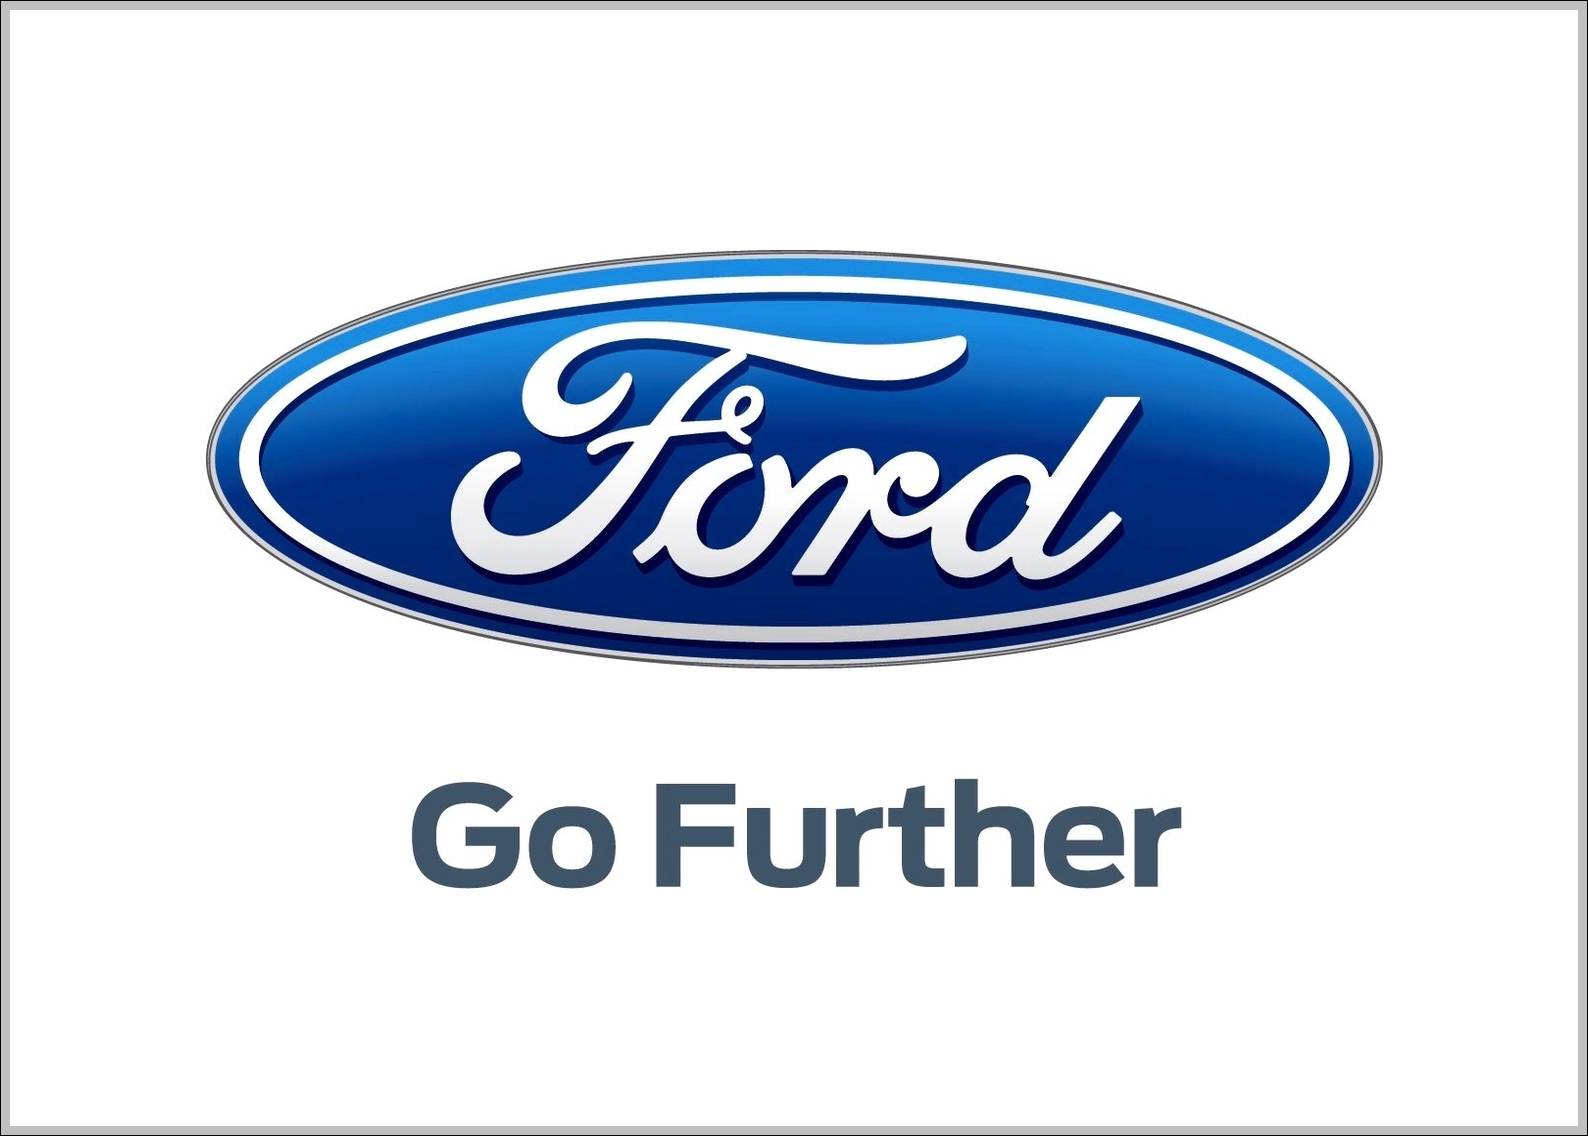 Ford logo and slogan